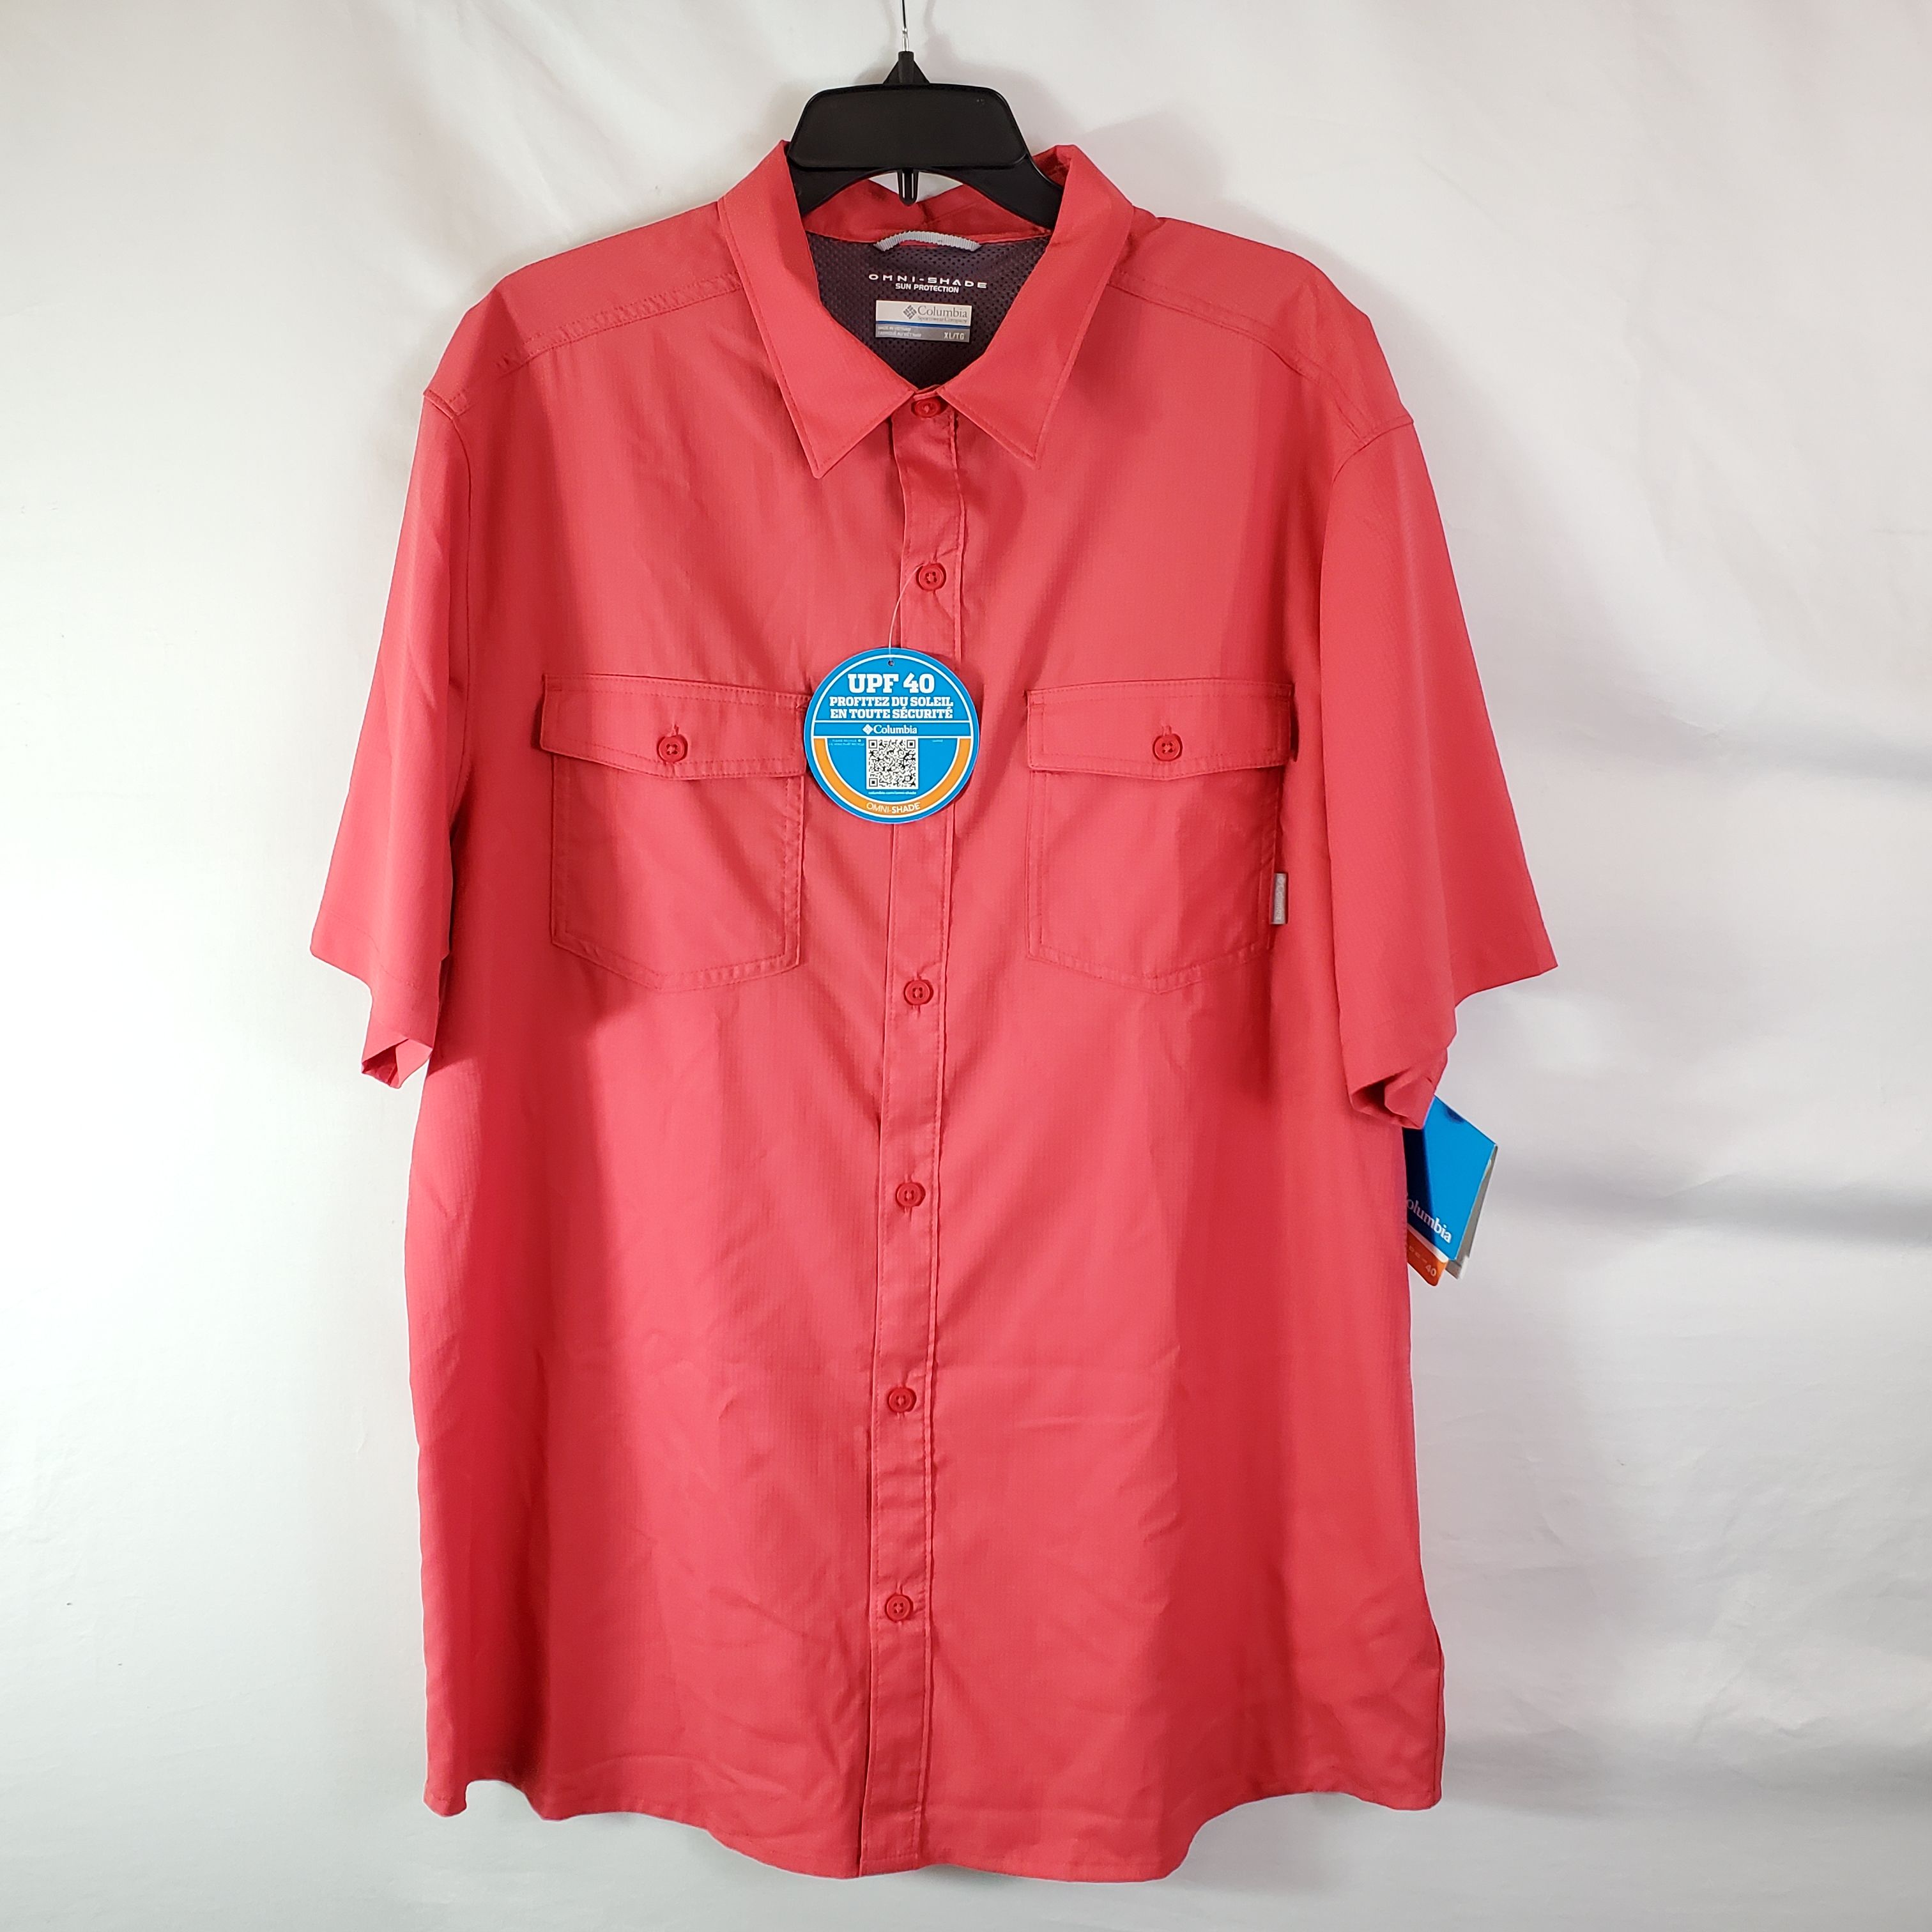 Buy the NWT Mens Blue Short Sleeve PFG Omni-Shade UPF 50 Fishing Button-Up Shirt  XL